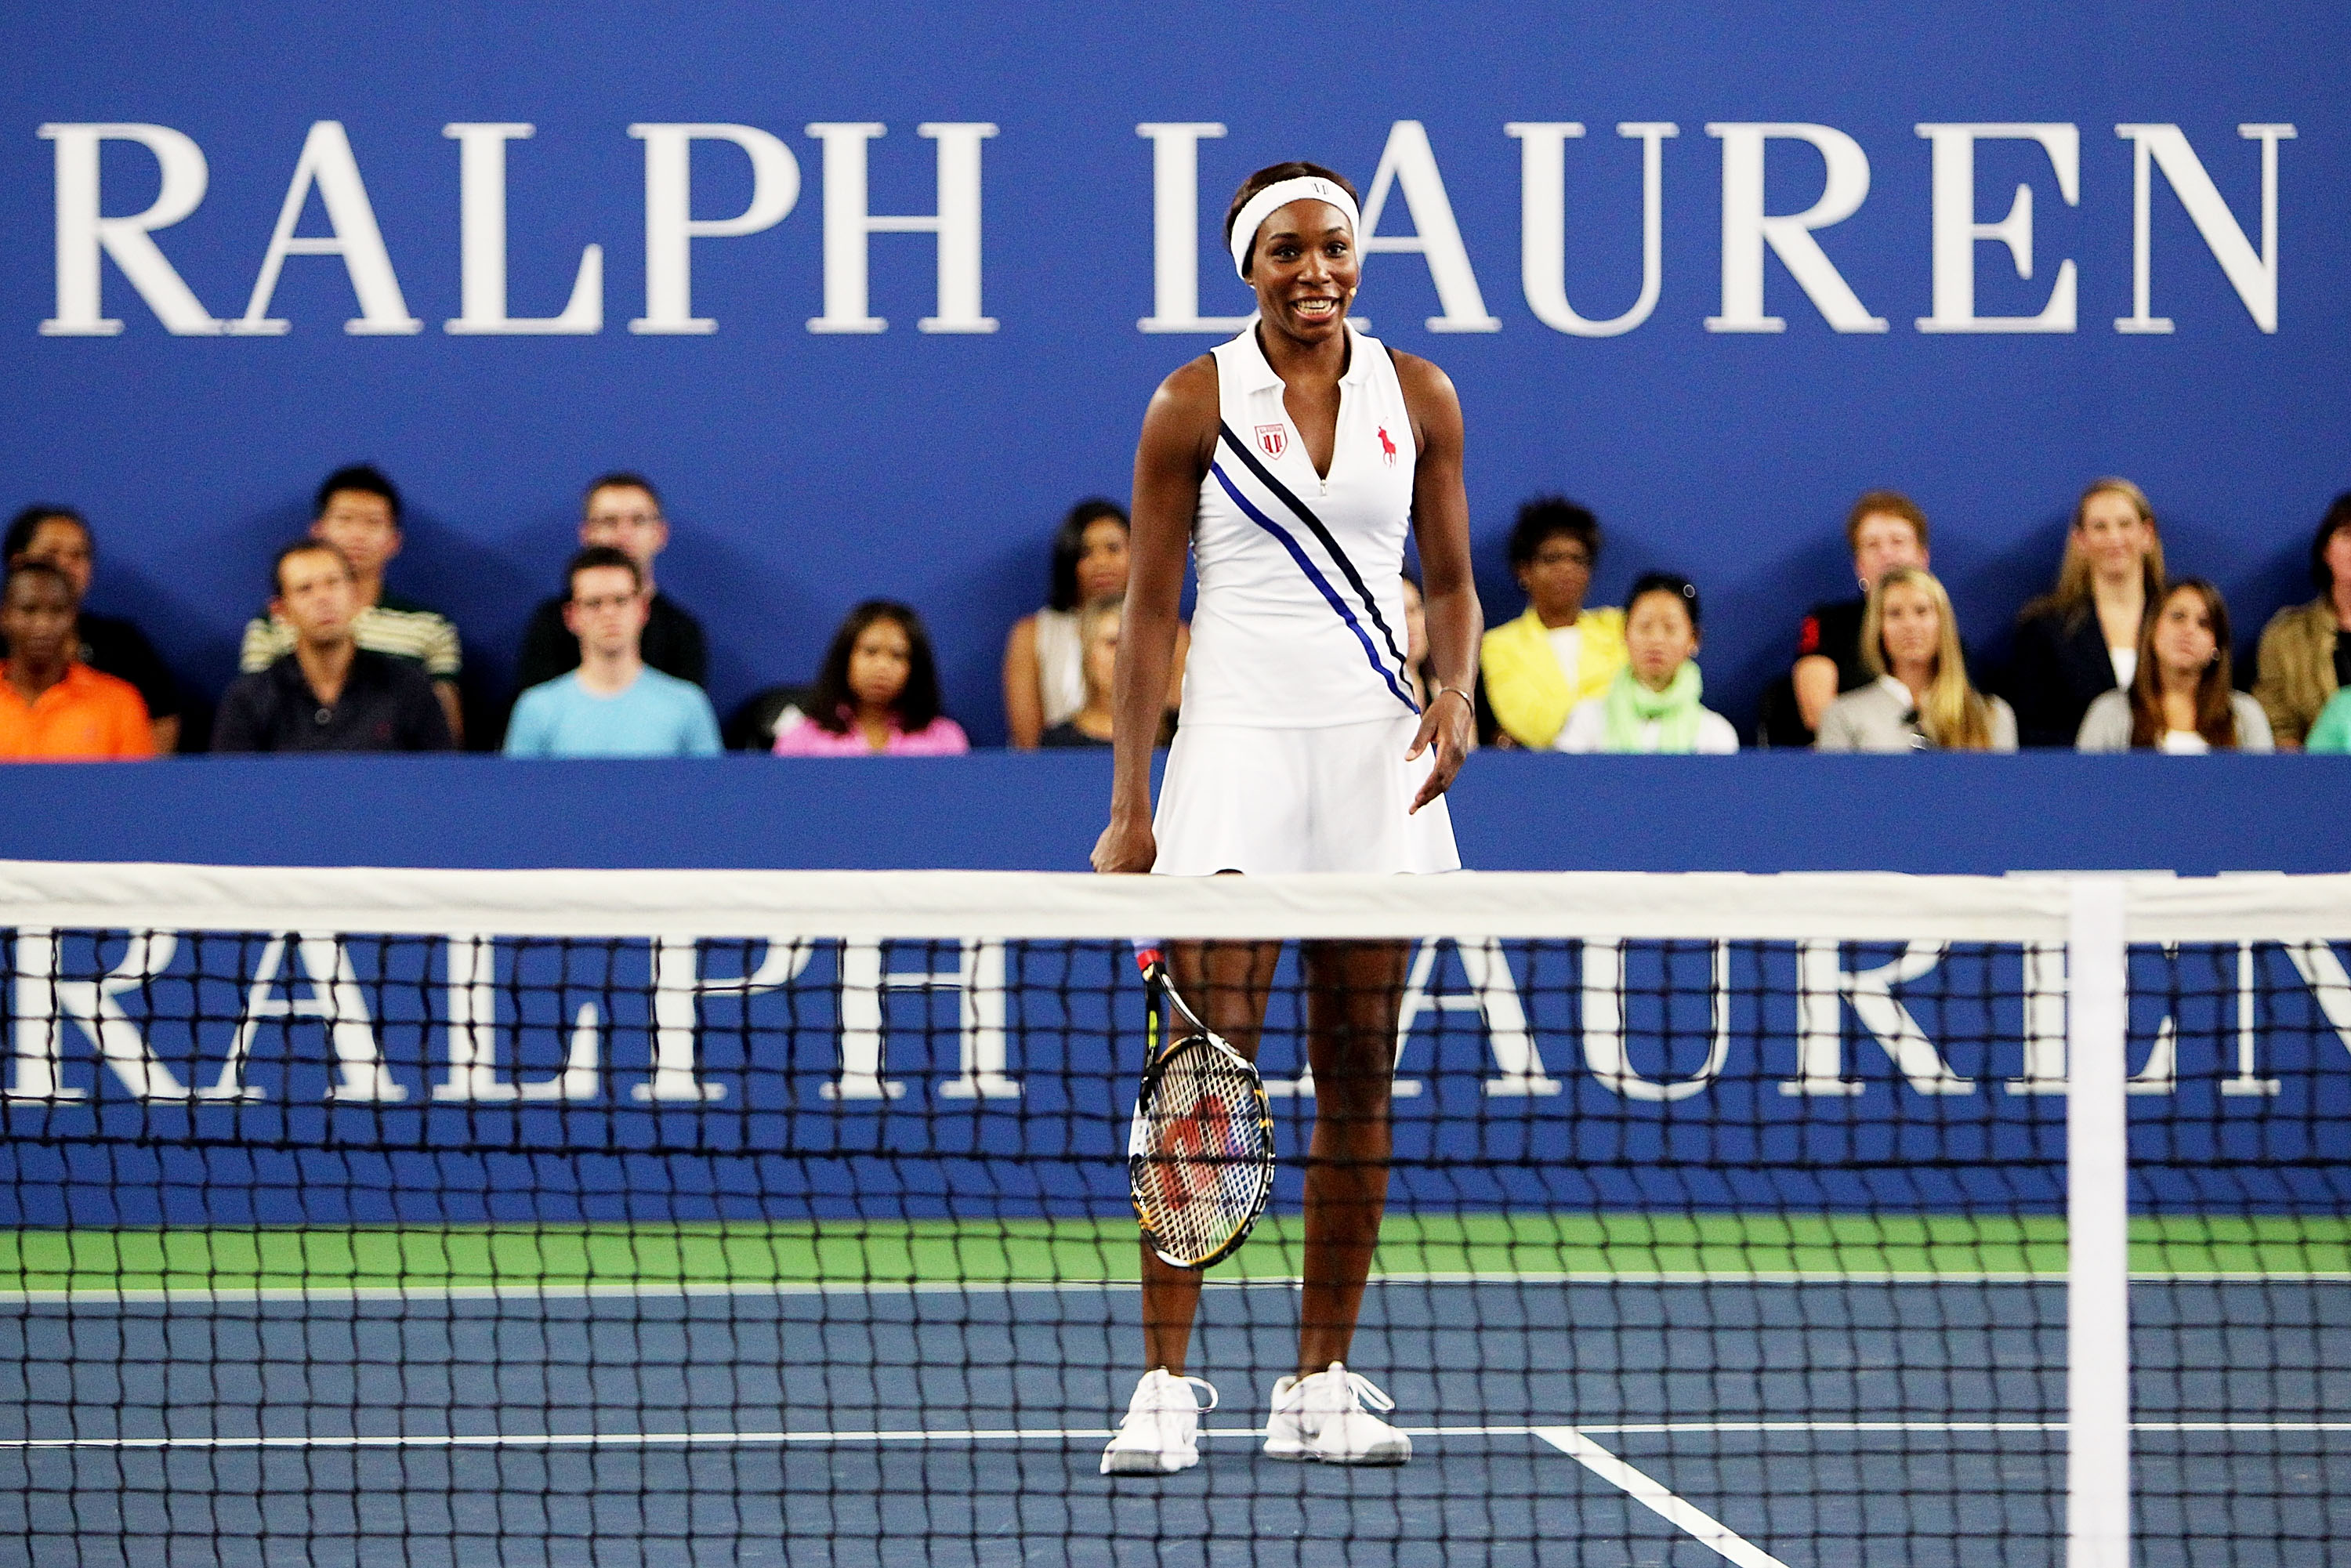 Venus Williams, wearing Ralph Lauren, at the 2010 U.S. Open on Aug. 26, 2010 in New York City.